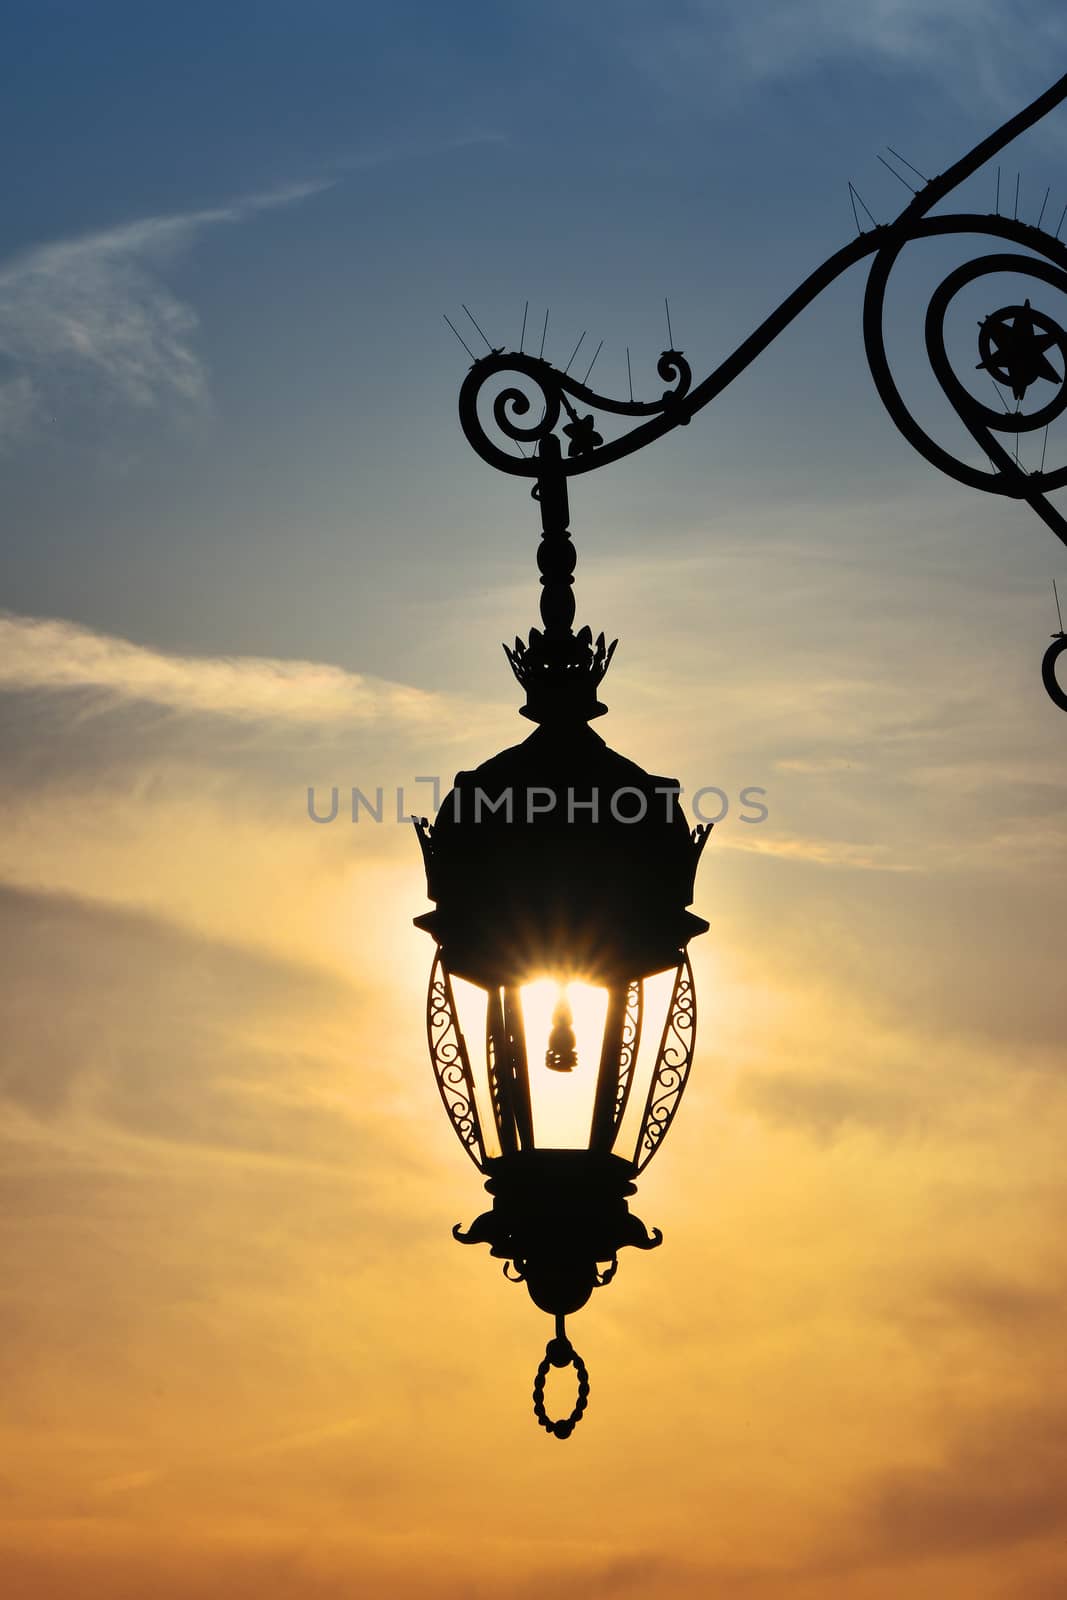 Antique street lamp lantern over sunset sky by BreakingTheWalls